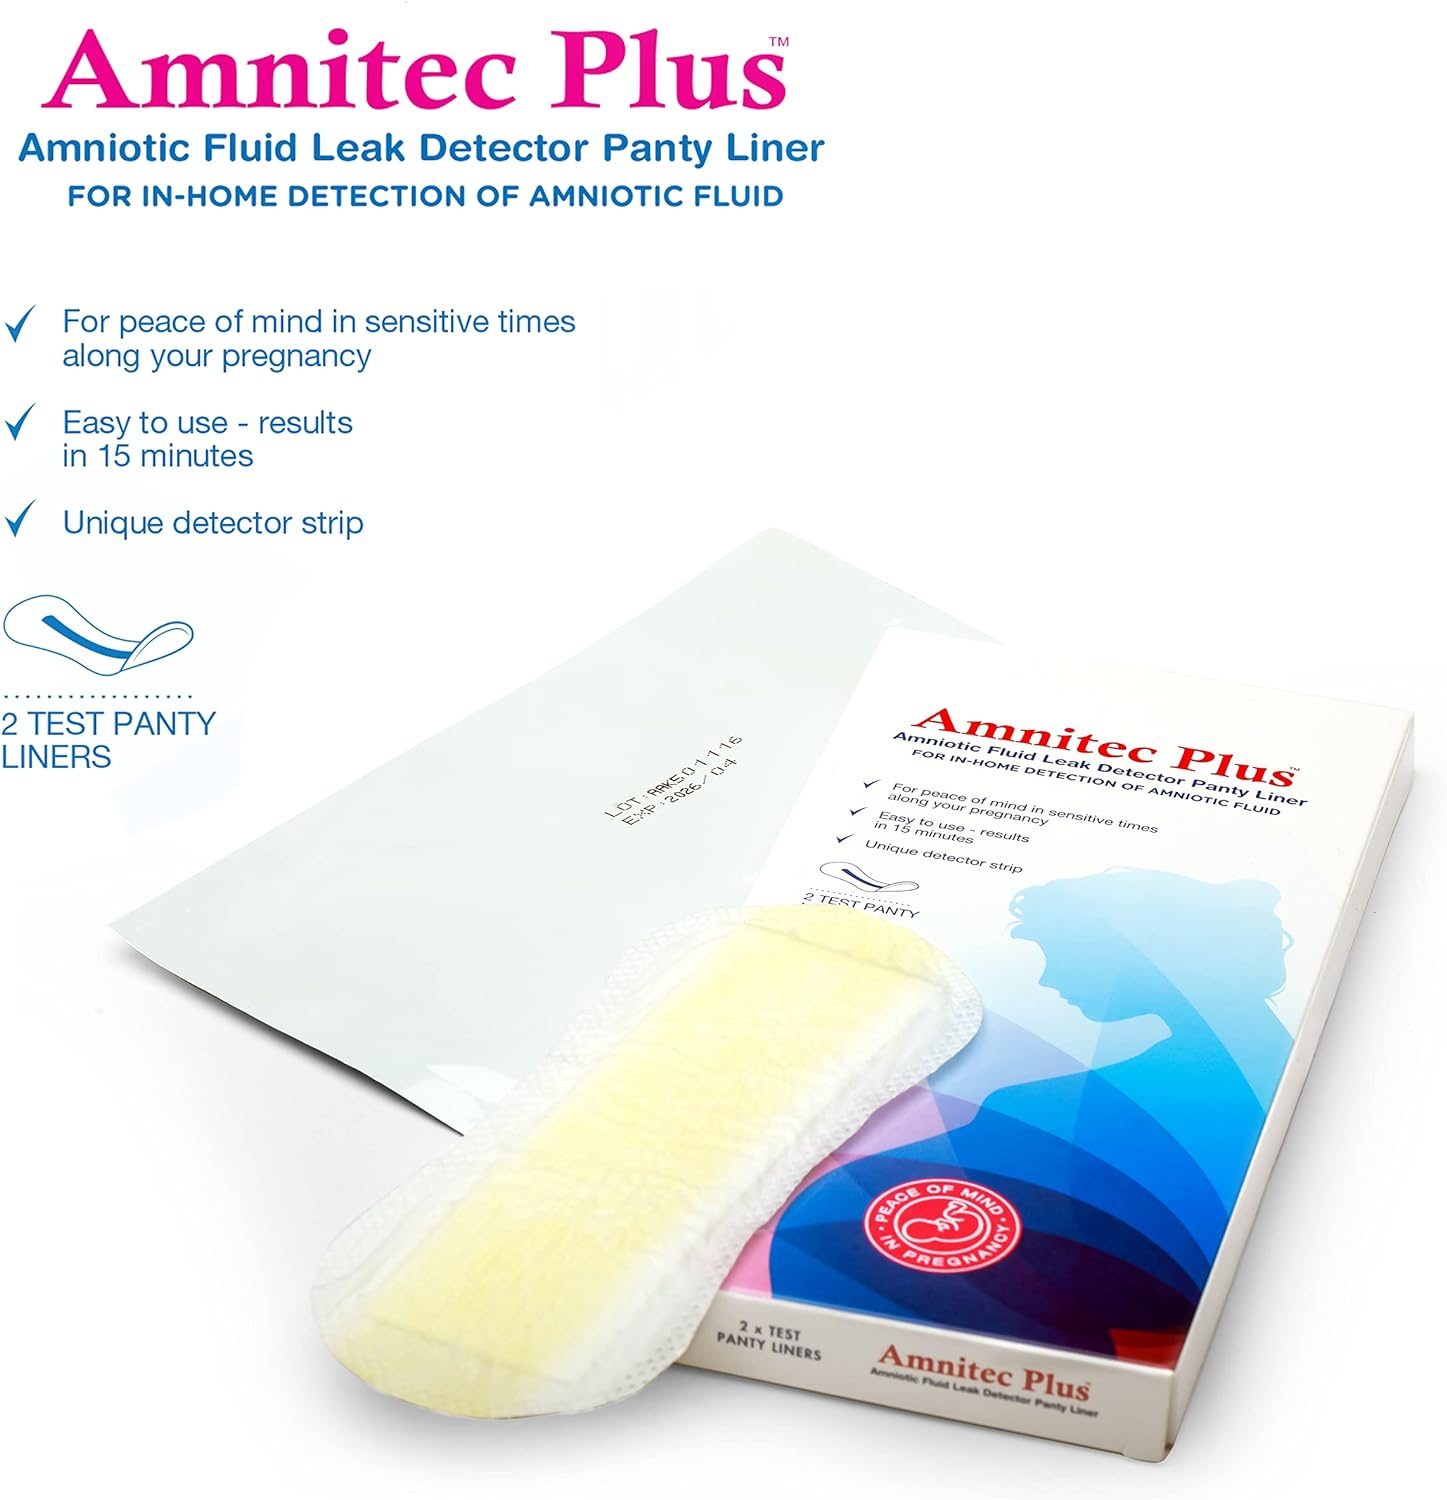 Amnitec Plus Amniotic Fluid Leak Detector Panty Liner, 2 test panty liners